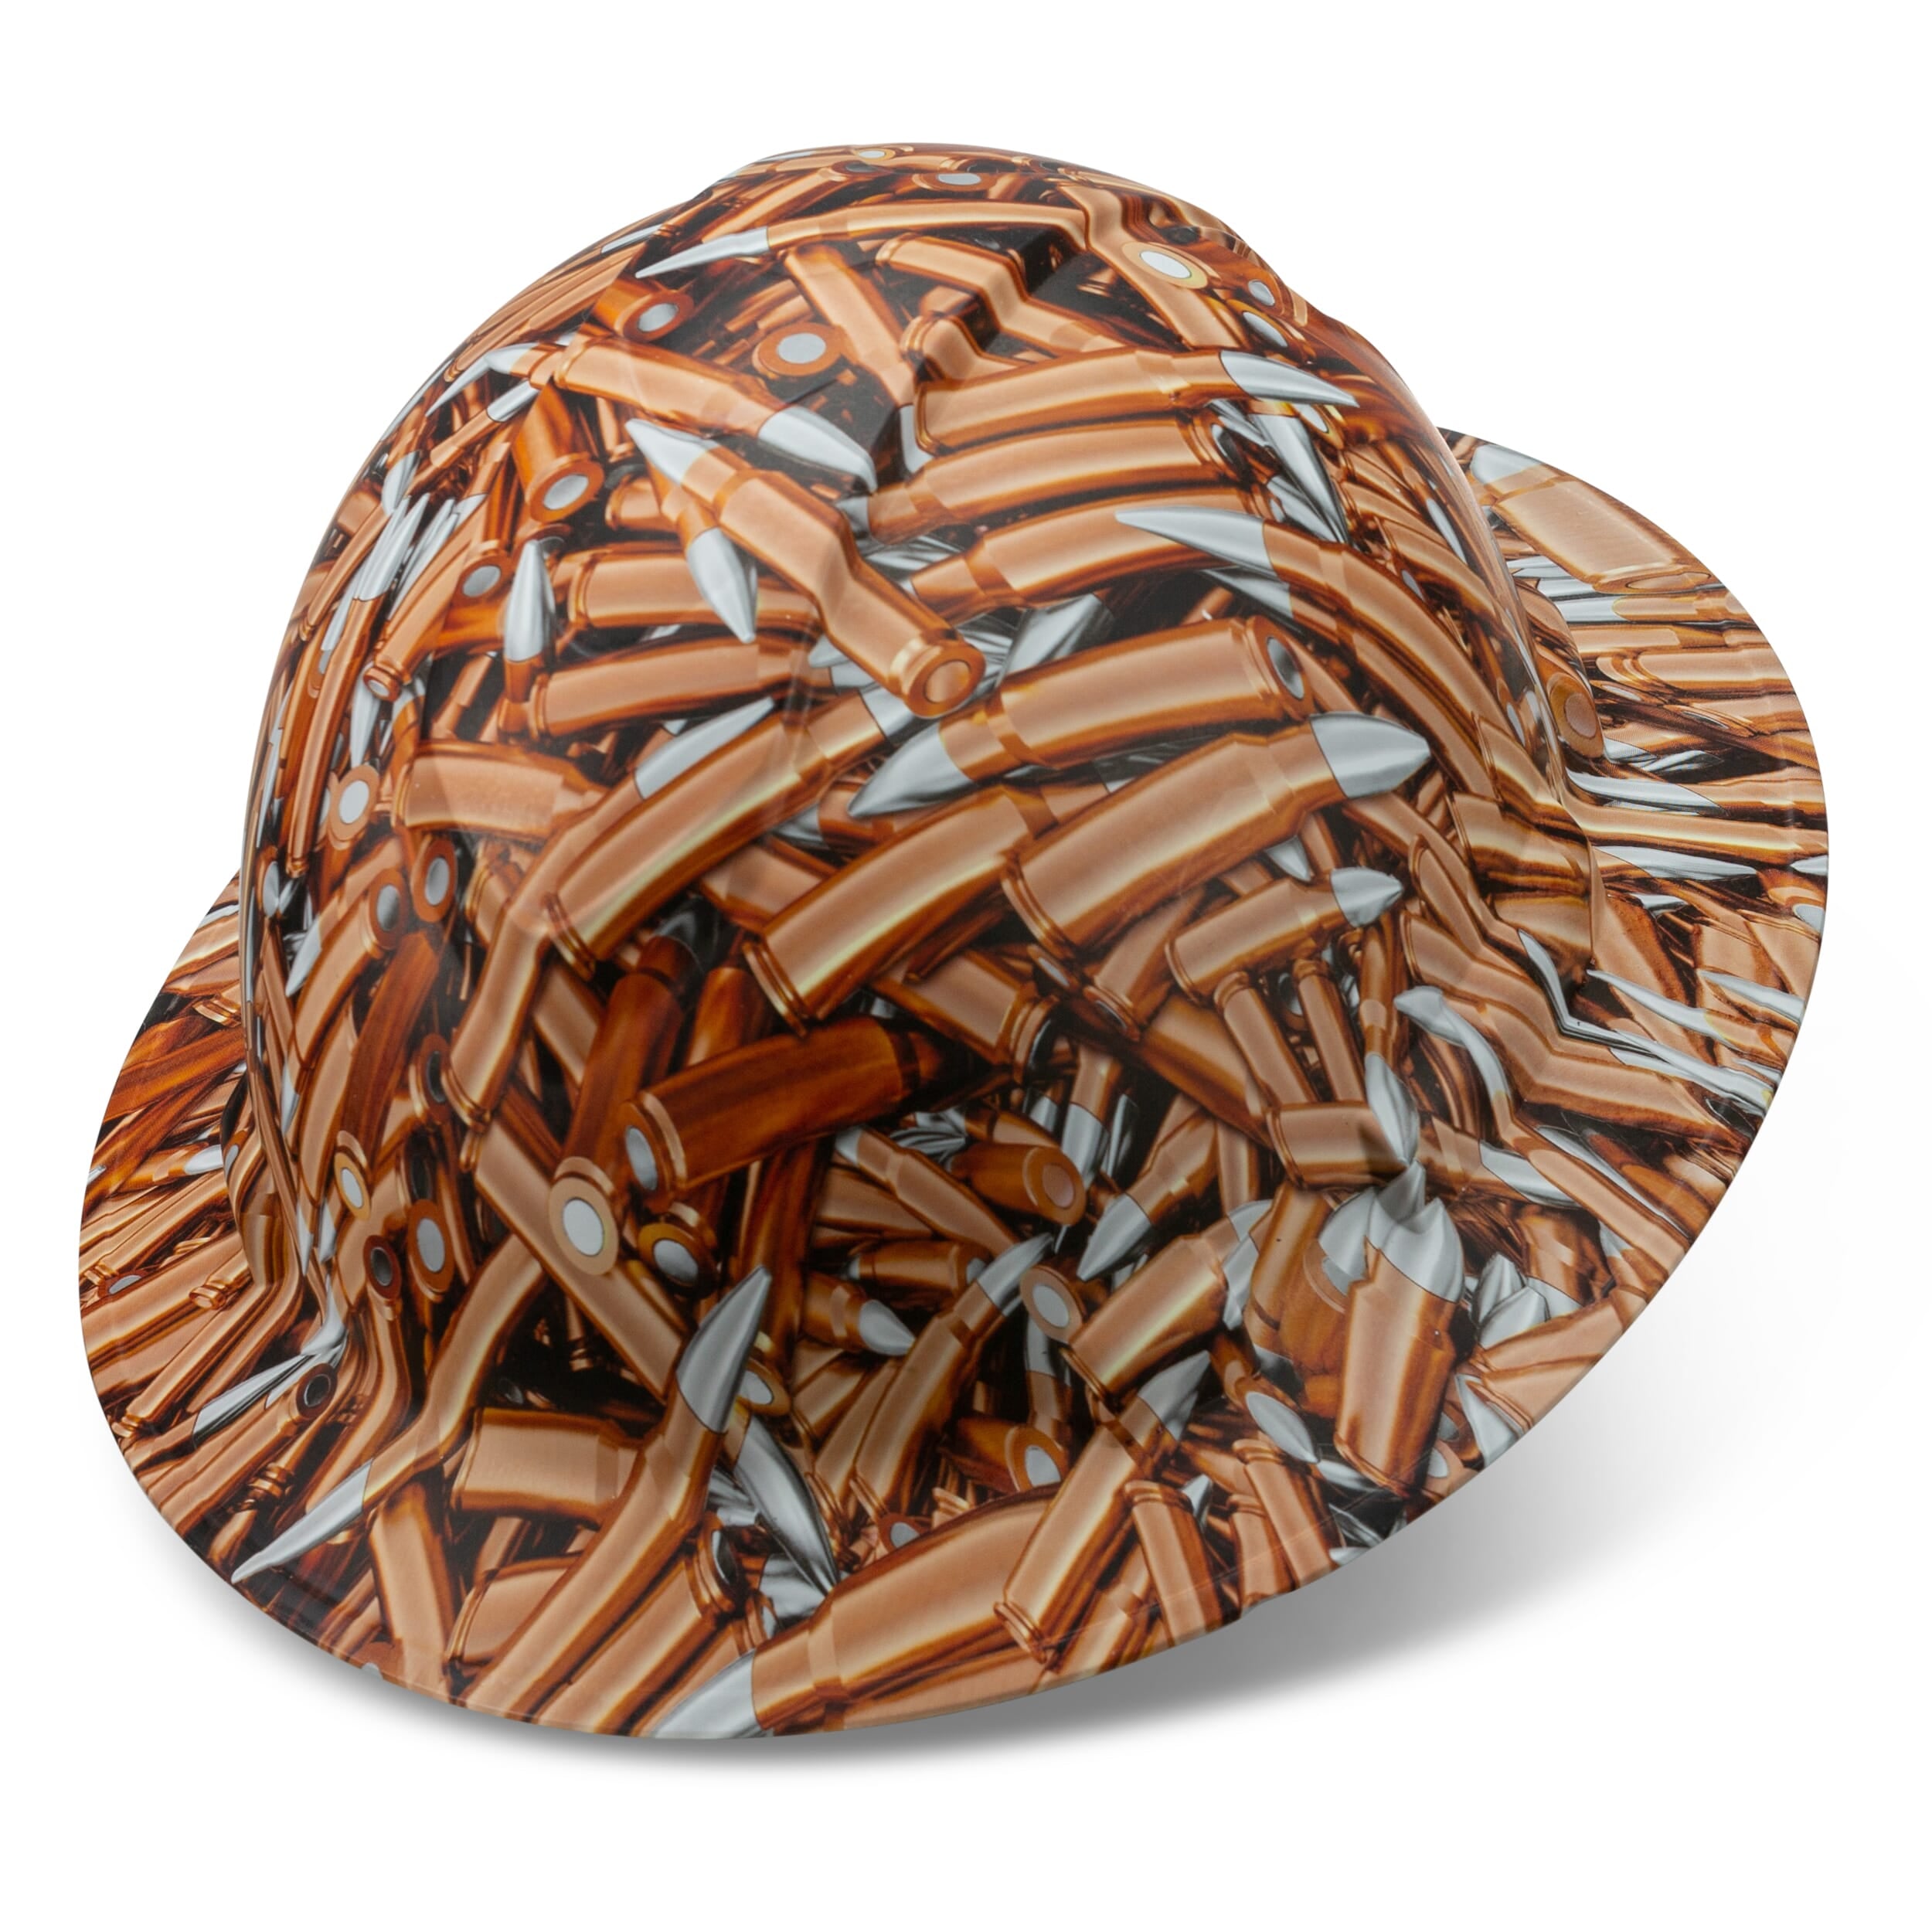 Full Brim Pyramex Hard Hat, Custom Pocket Full Of Shells Design, Safety Helmet, 6 Point